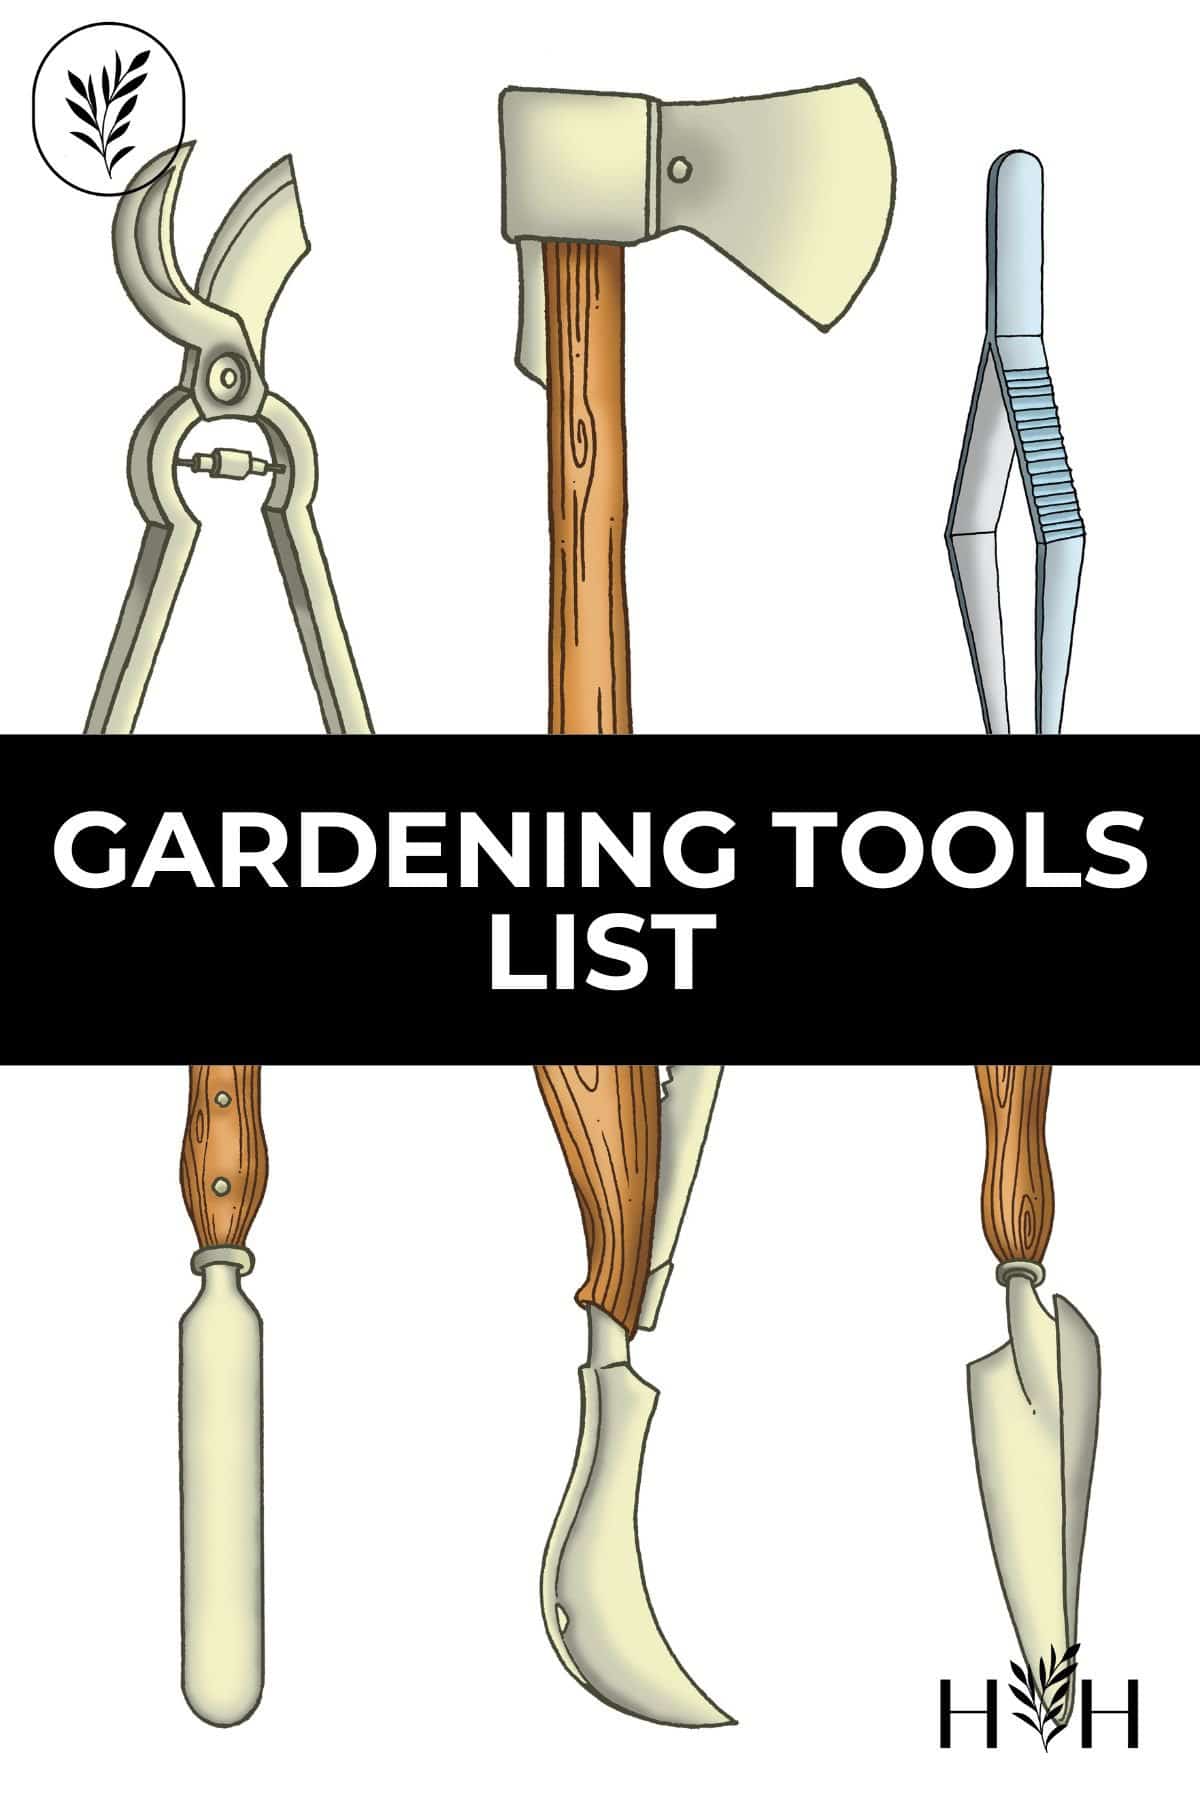 Gardening tools list via @home4theharvest